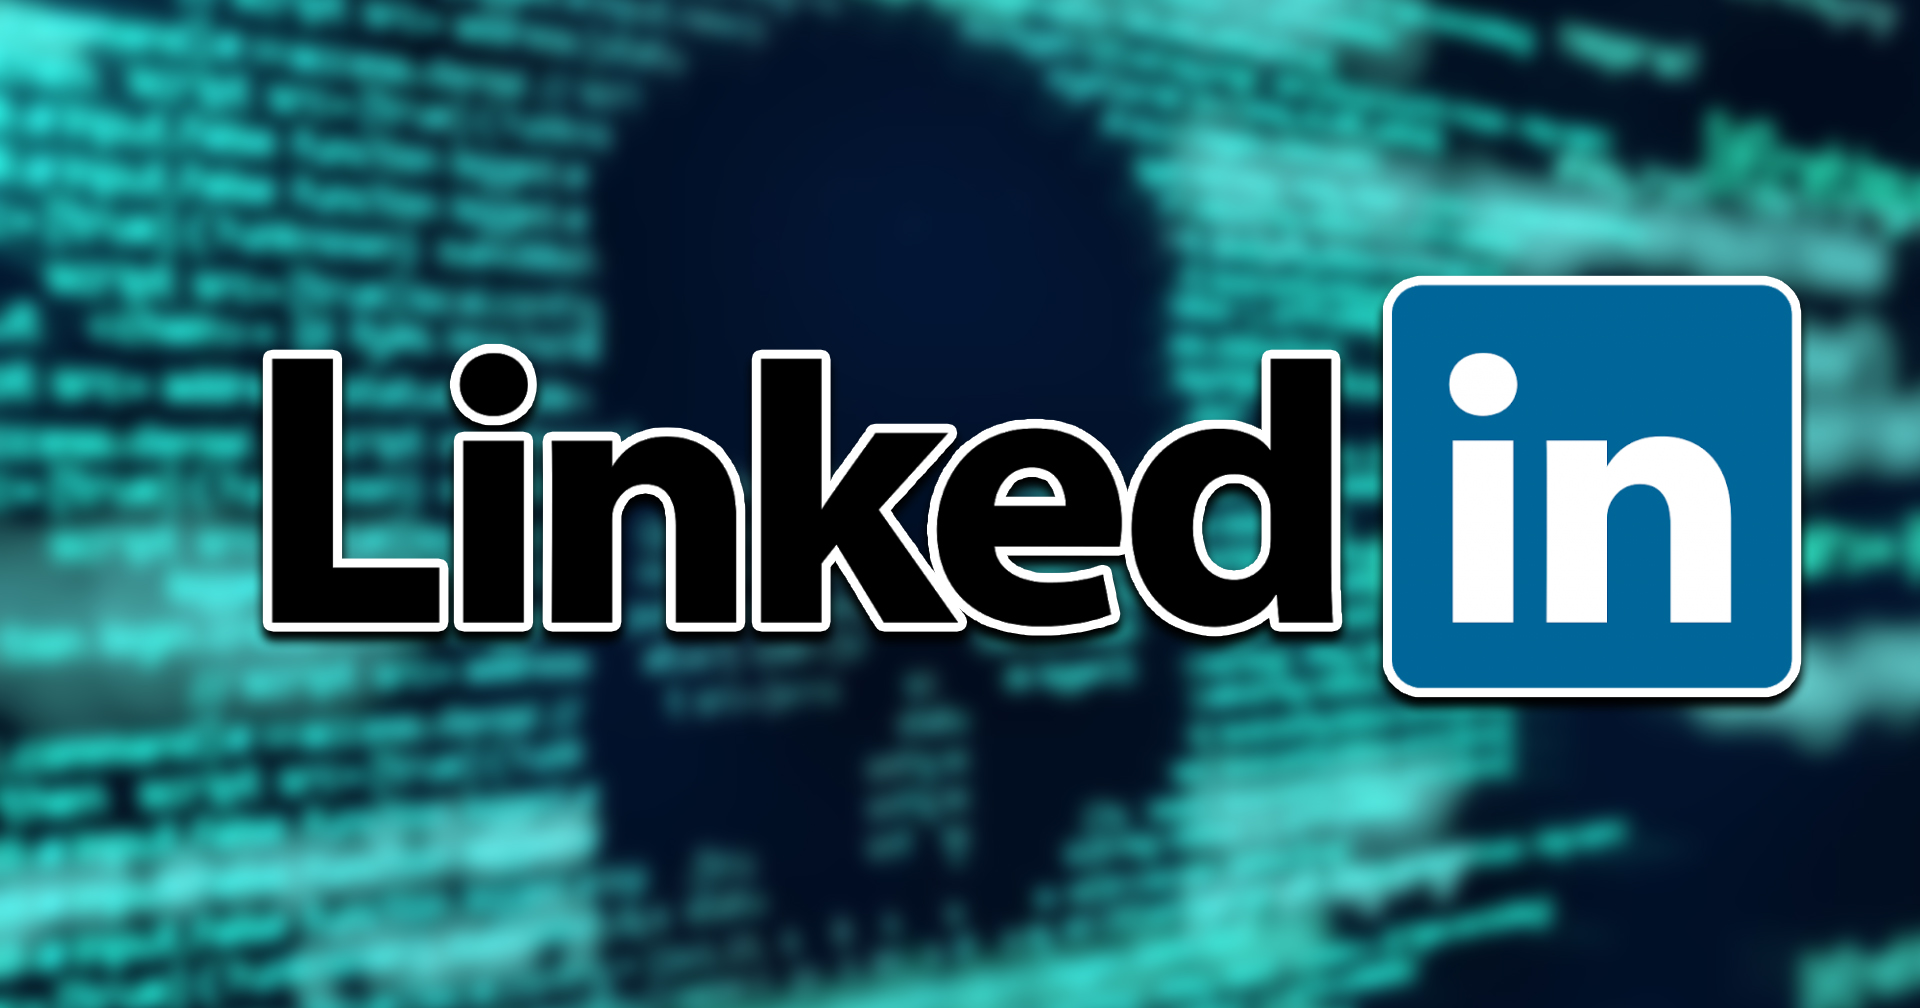 LinkedIn แถลงบัญชีผู้ใช้หลุดรอบ 2 กว่า 700 ล้านรายชื่อไม่เป็นจริง